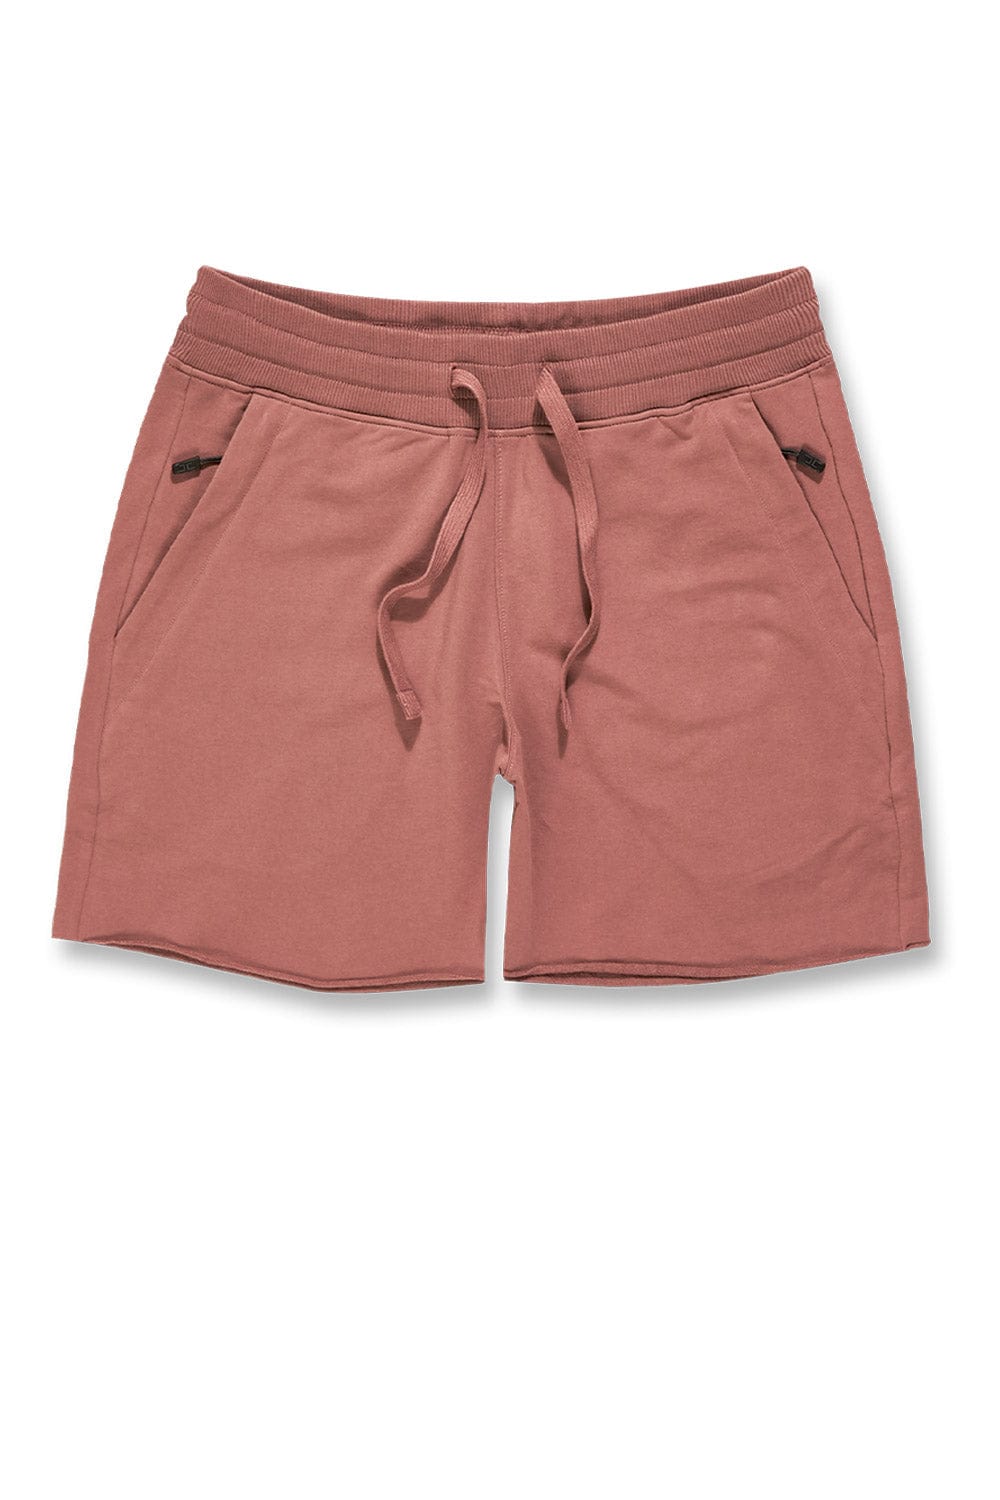 Jordan Craig Athletic - Summer Breeze Knit Shorts Canyon / S